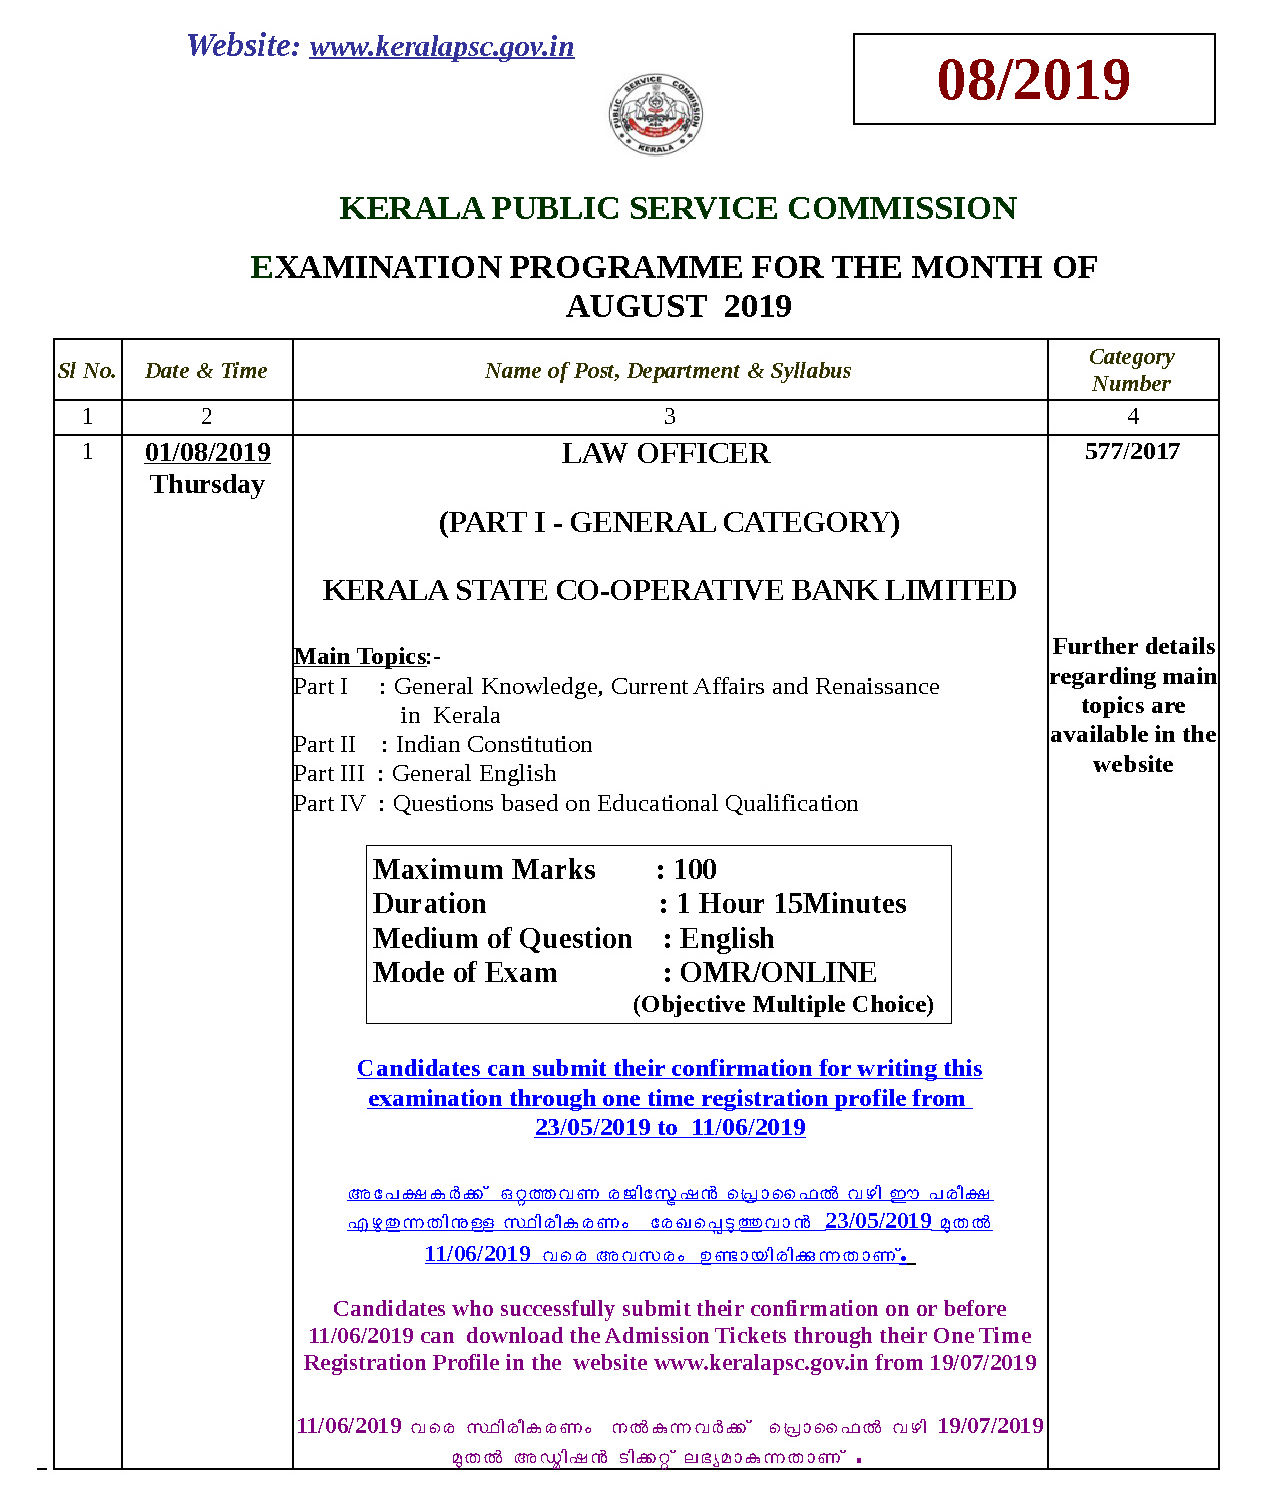 KPSC Examination Programme August 2019 - Notification Image 1